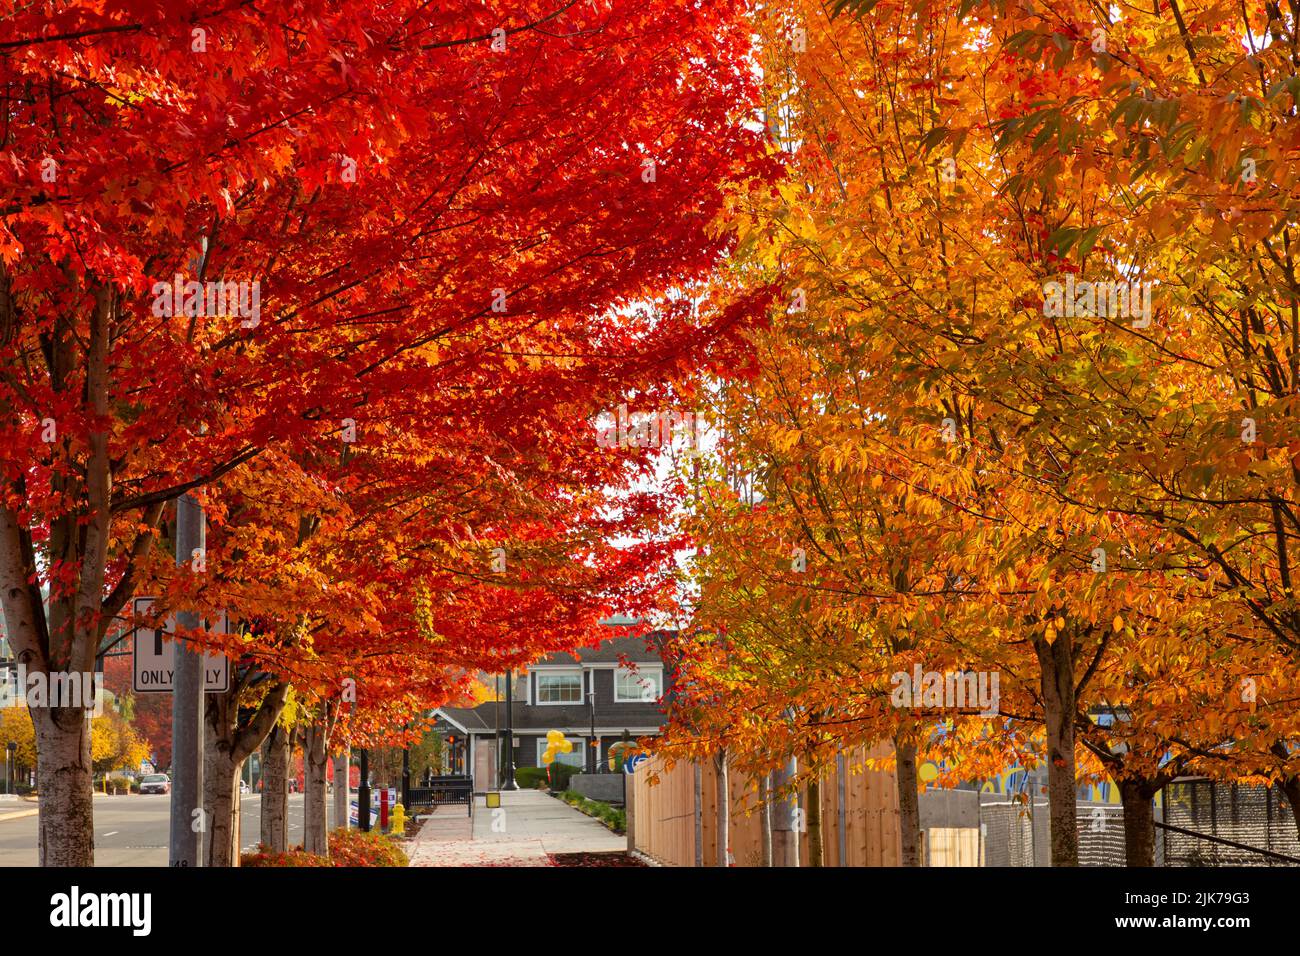 WA21827-00...WASHINGTON - Colorful leaves in the fall lining the sidewalks in Woodinville, Washington. Stock Photo